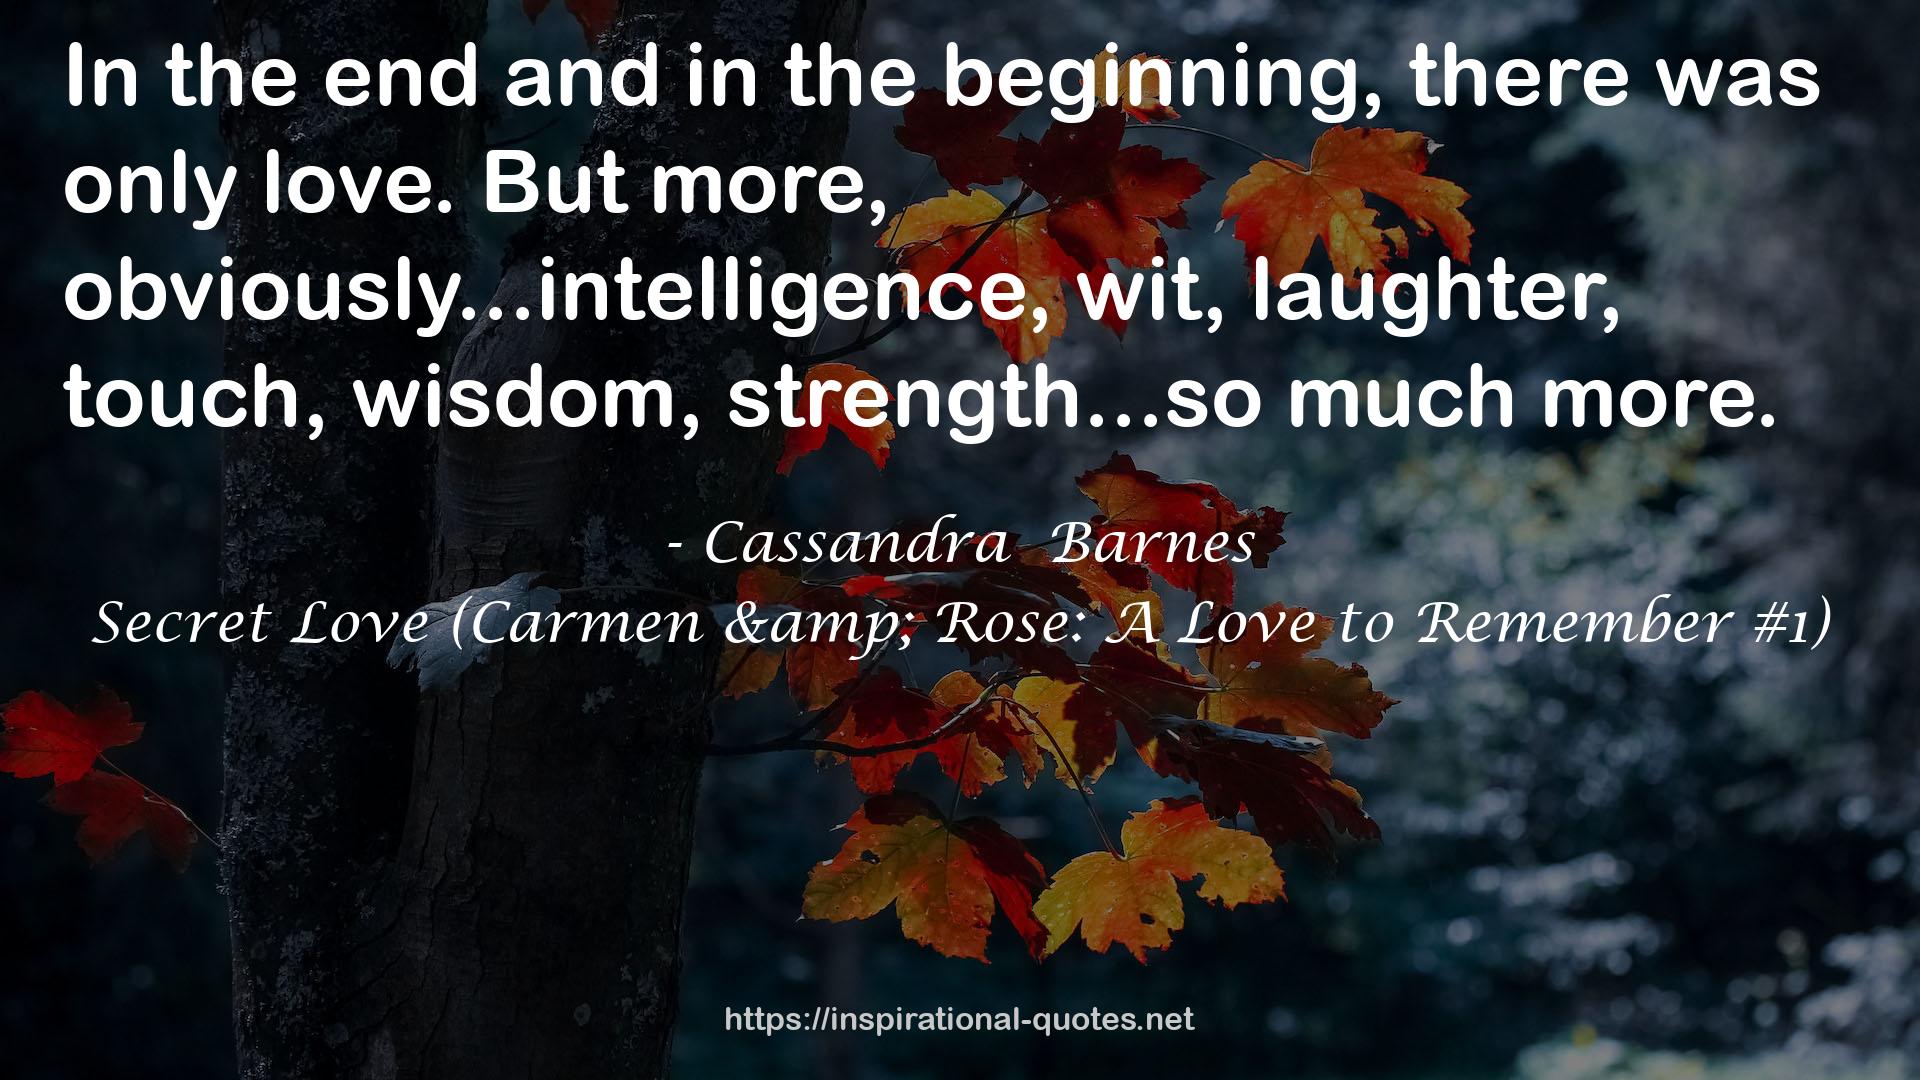 Secret Love (Carmen & Rose: A Love to Remember #1) QUOTES